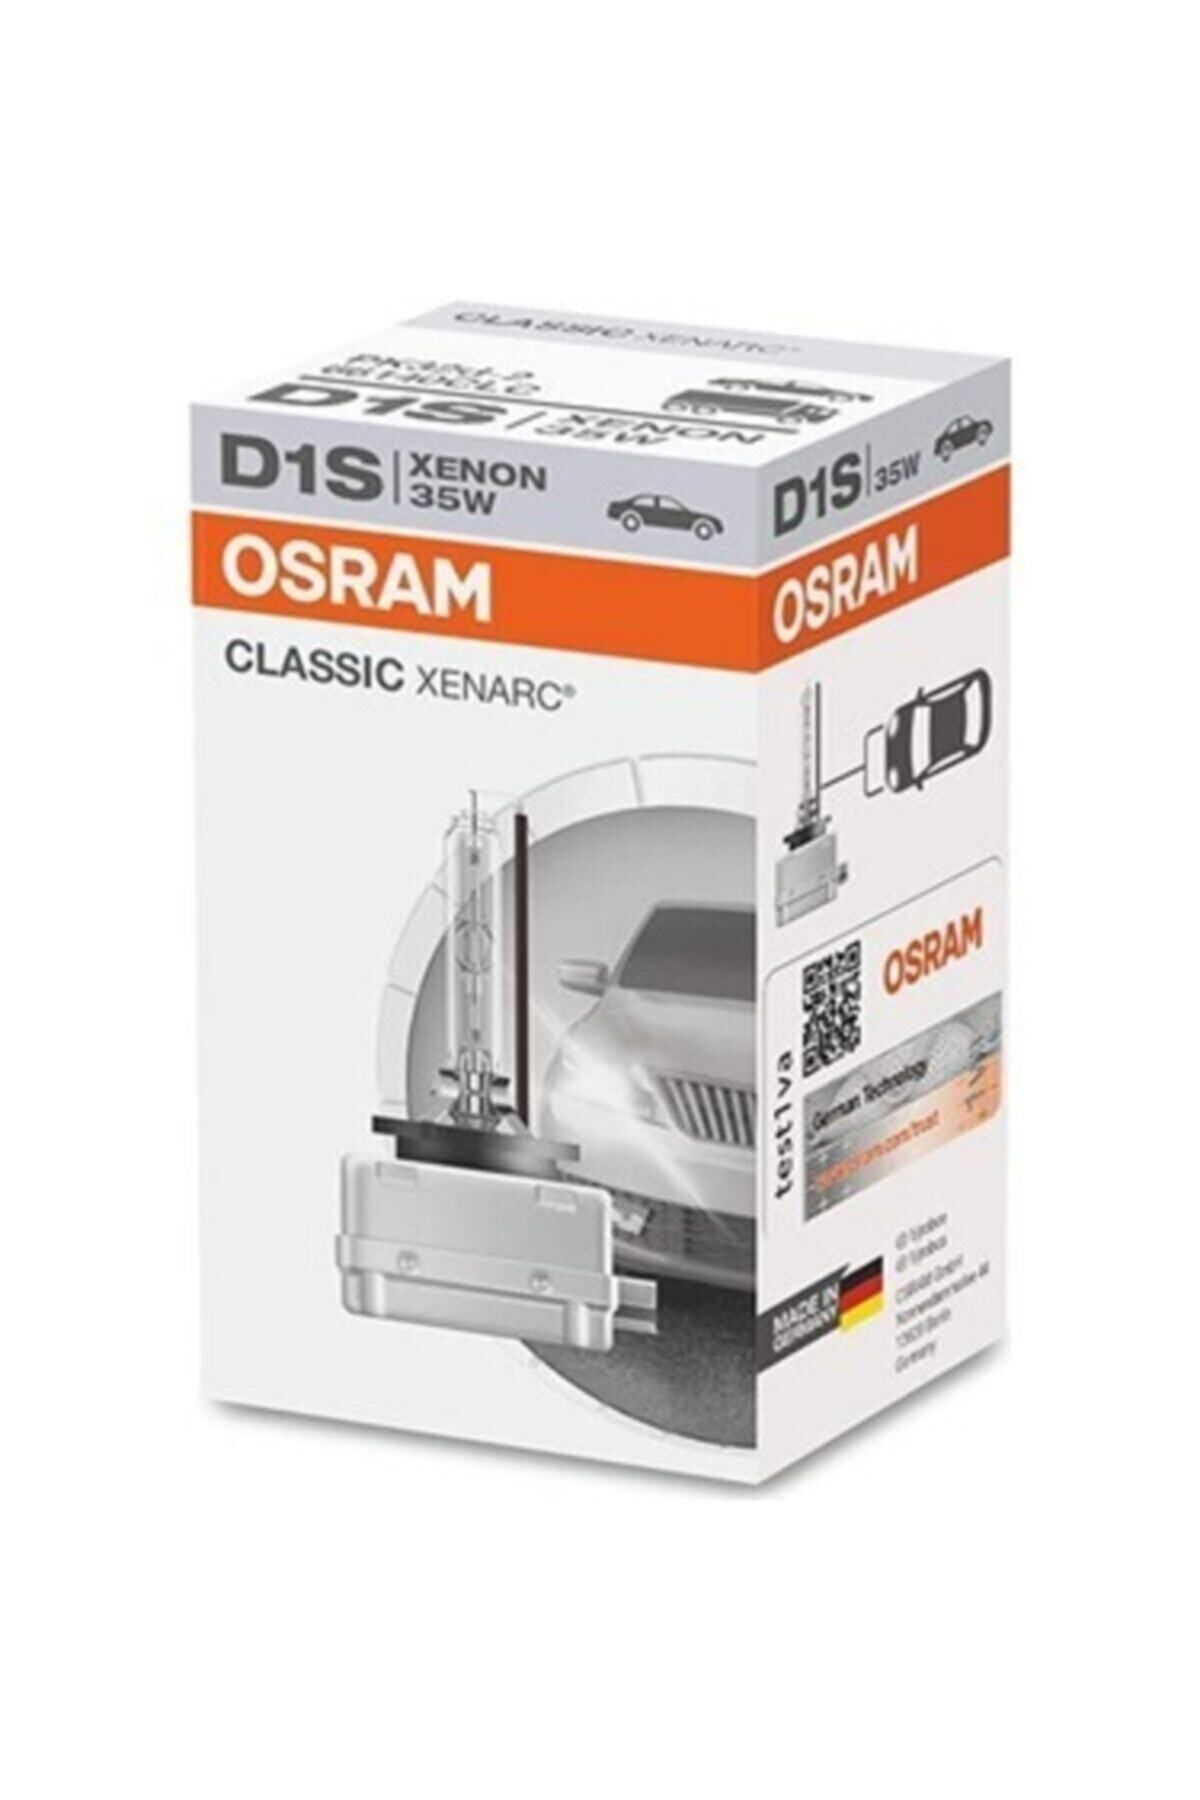 Osram D1s 35w Gaz Desarjlı Far Ampulü - Osm-66140 Clc